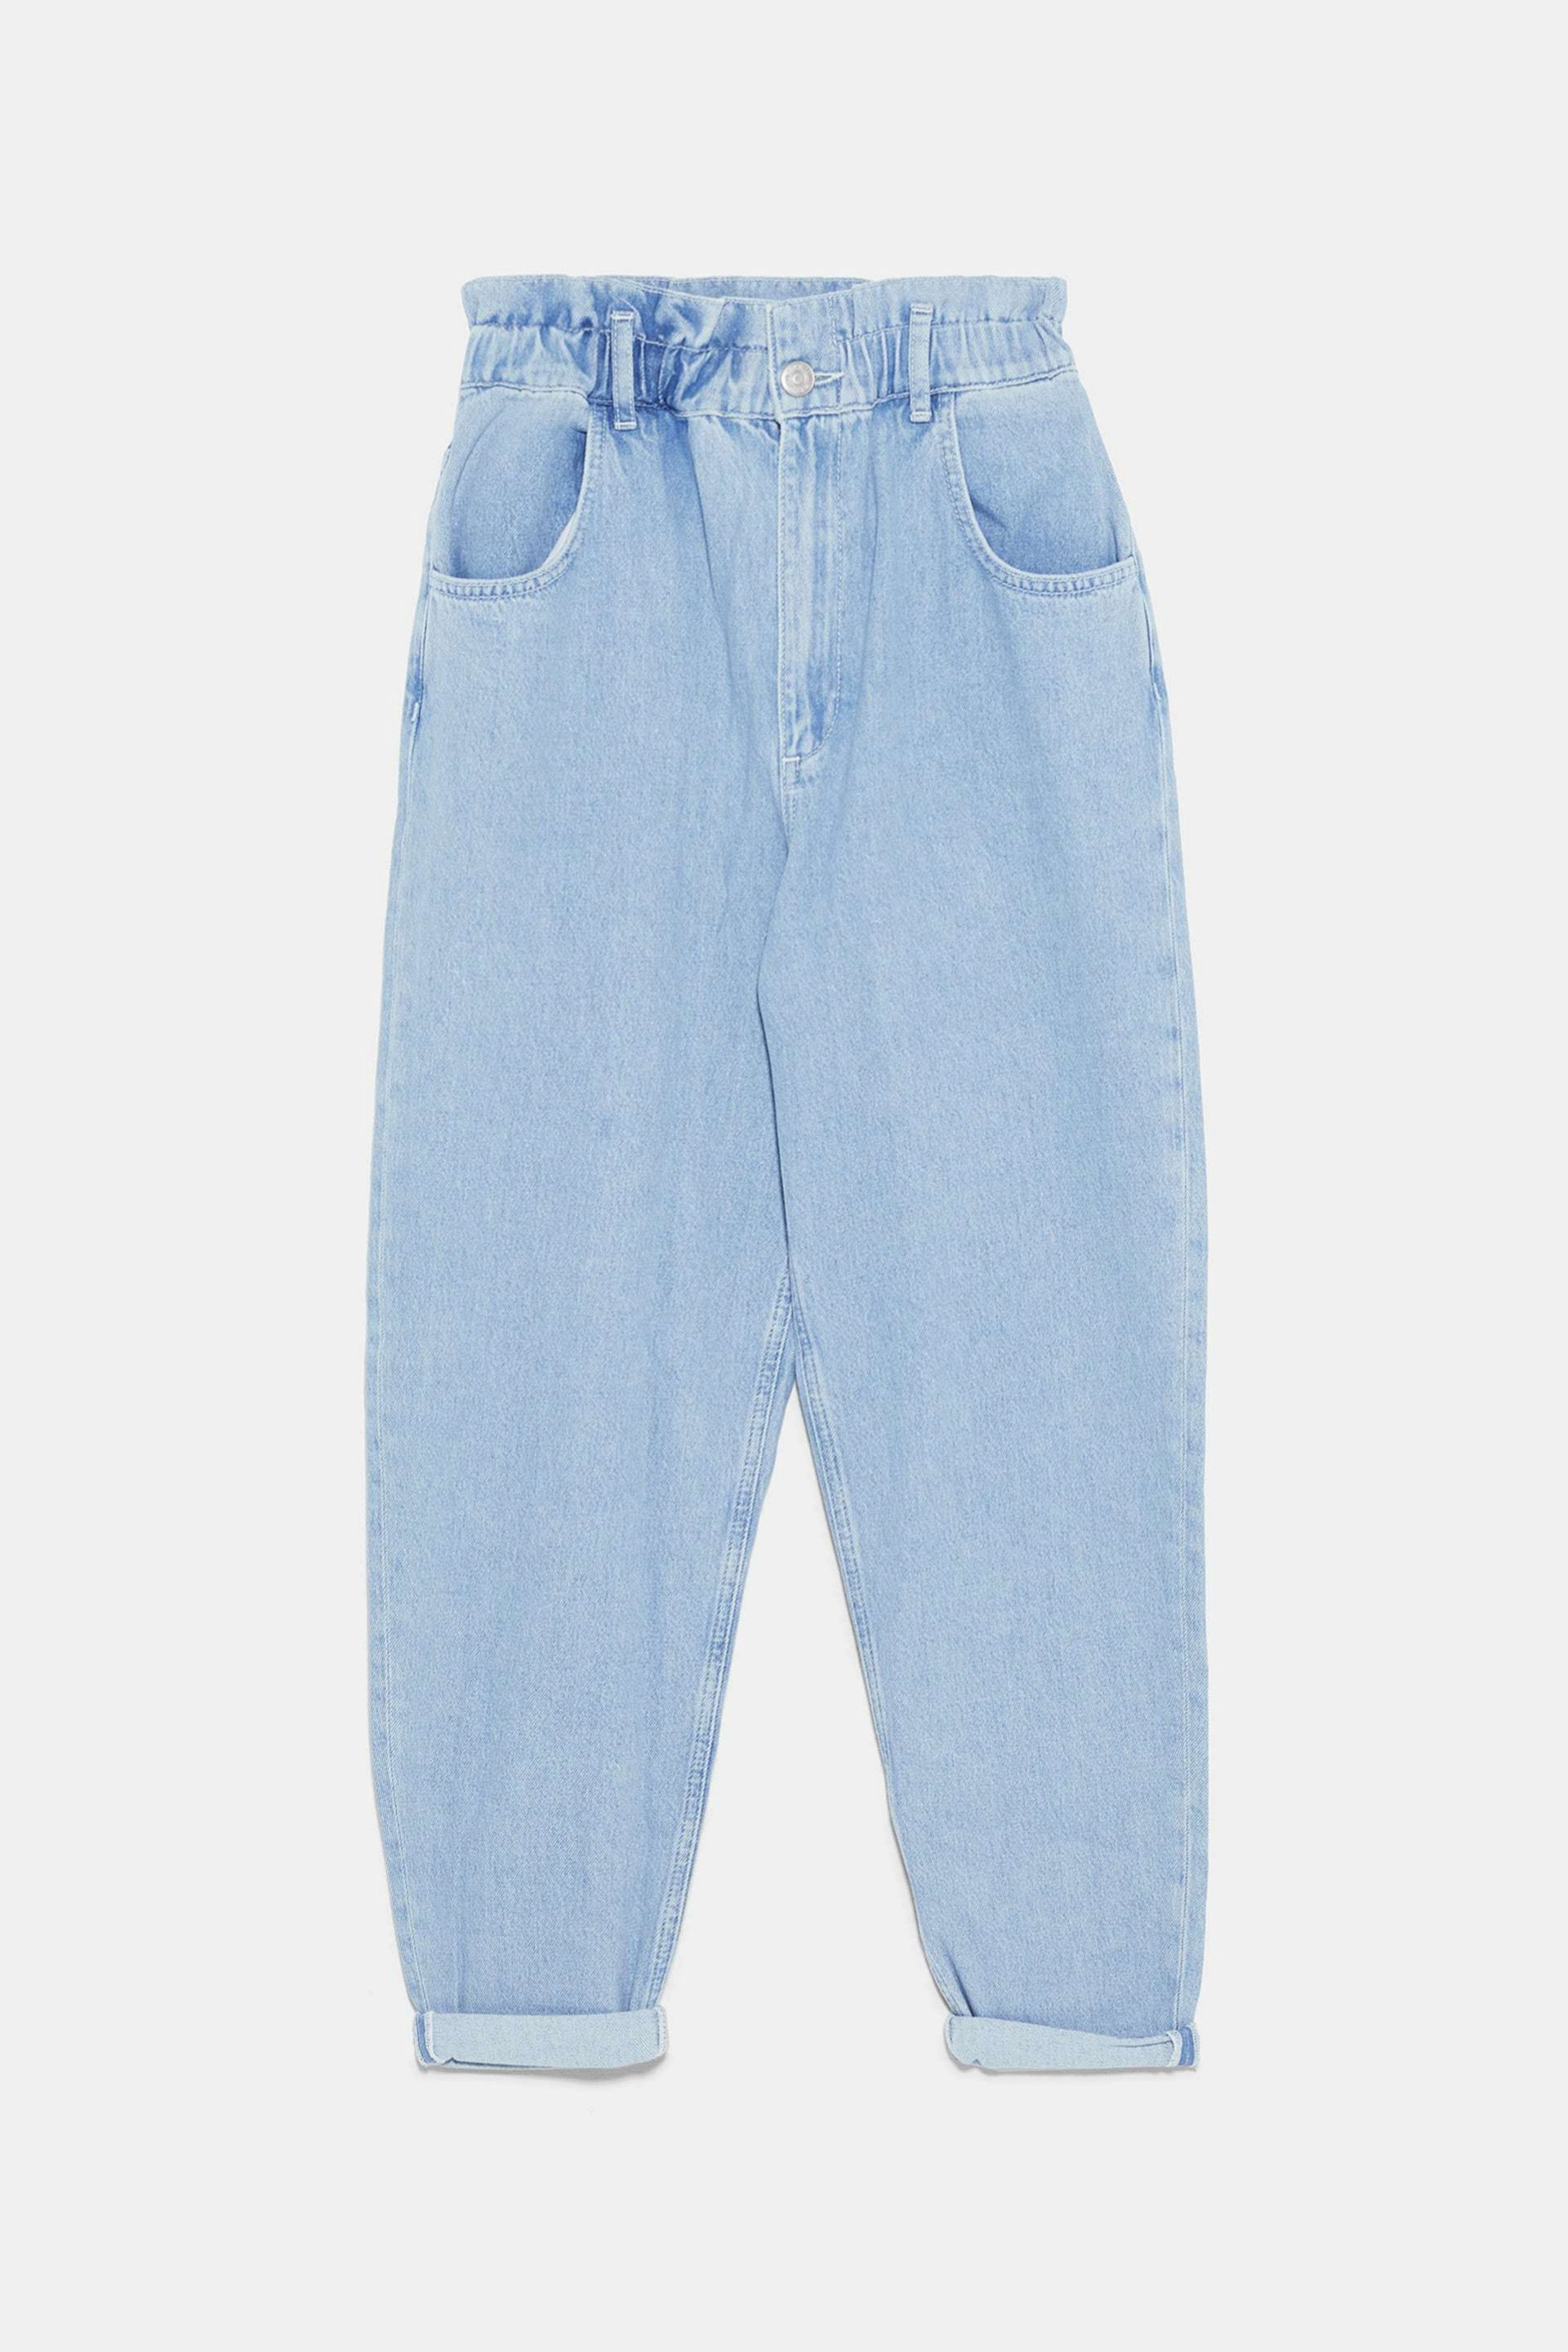 Jeans de corte paper bag de Zara (25,95)